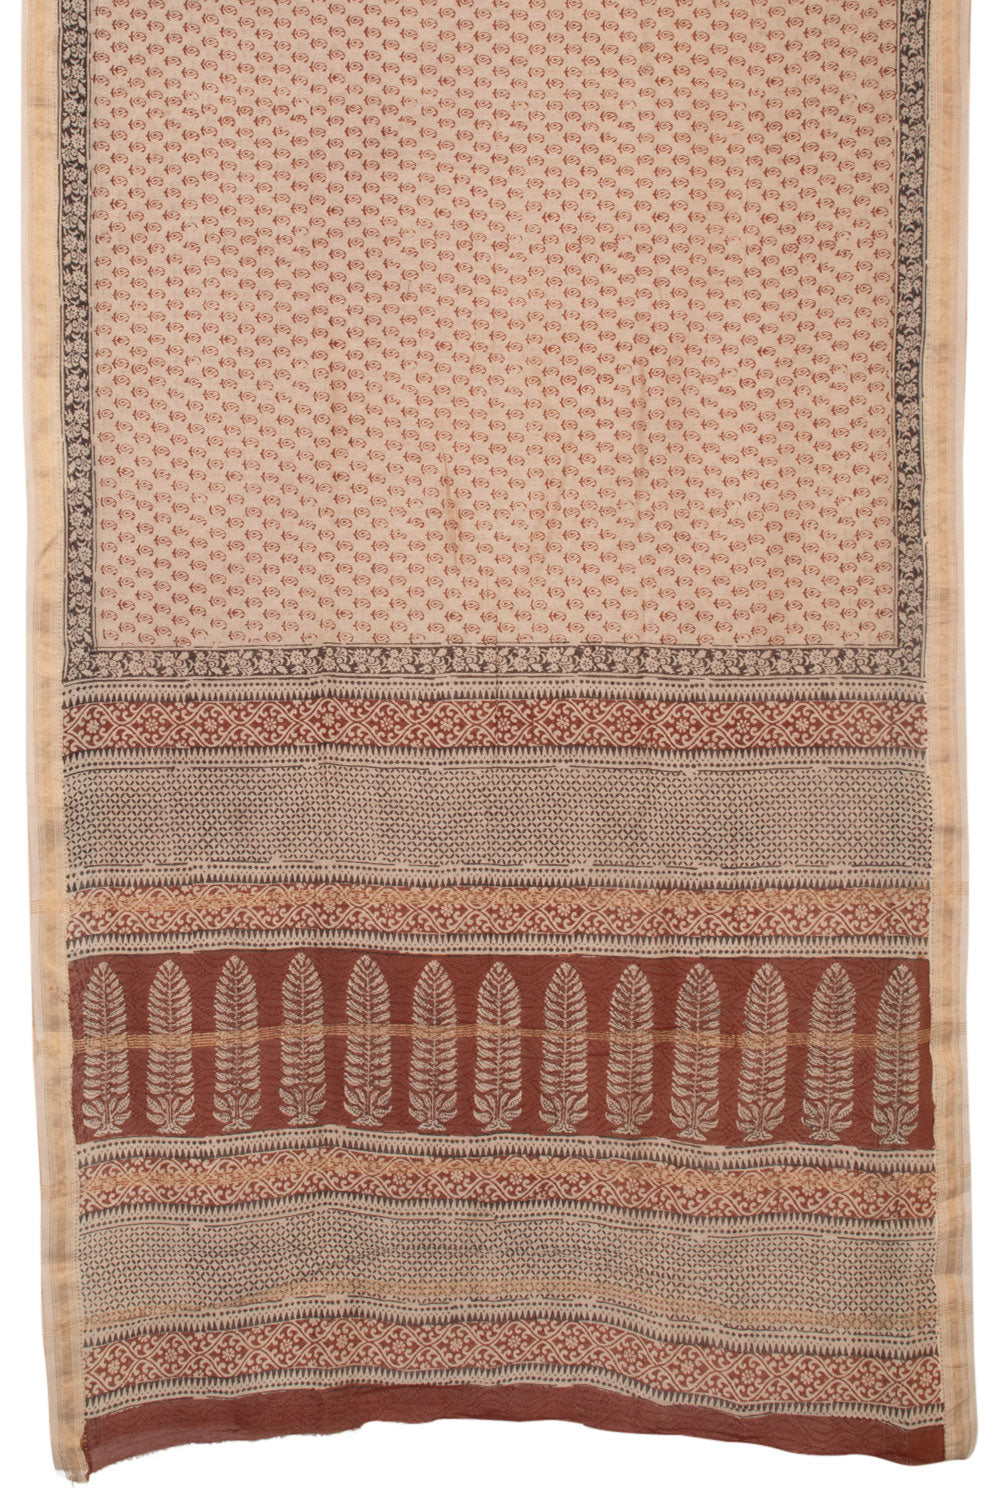 Off white Bagh Printed Silk Cotton Saree - Avishya